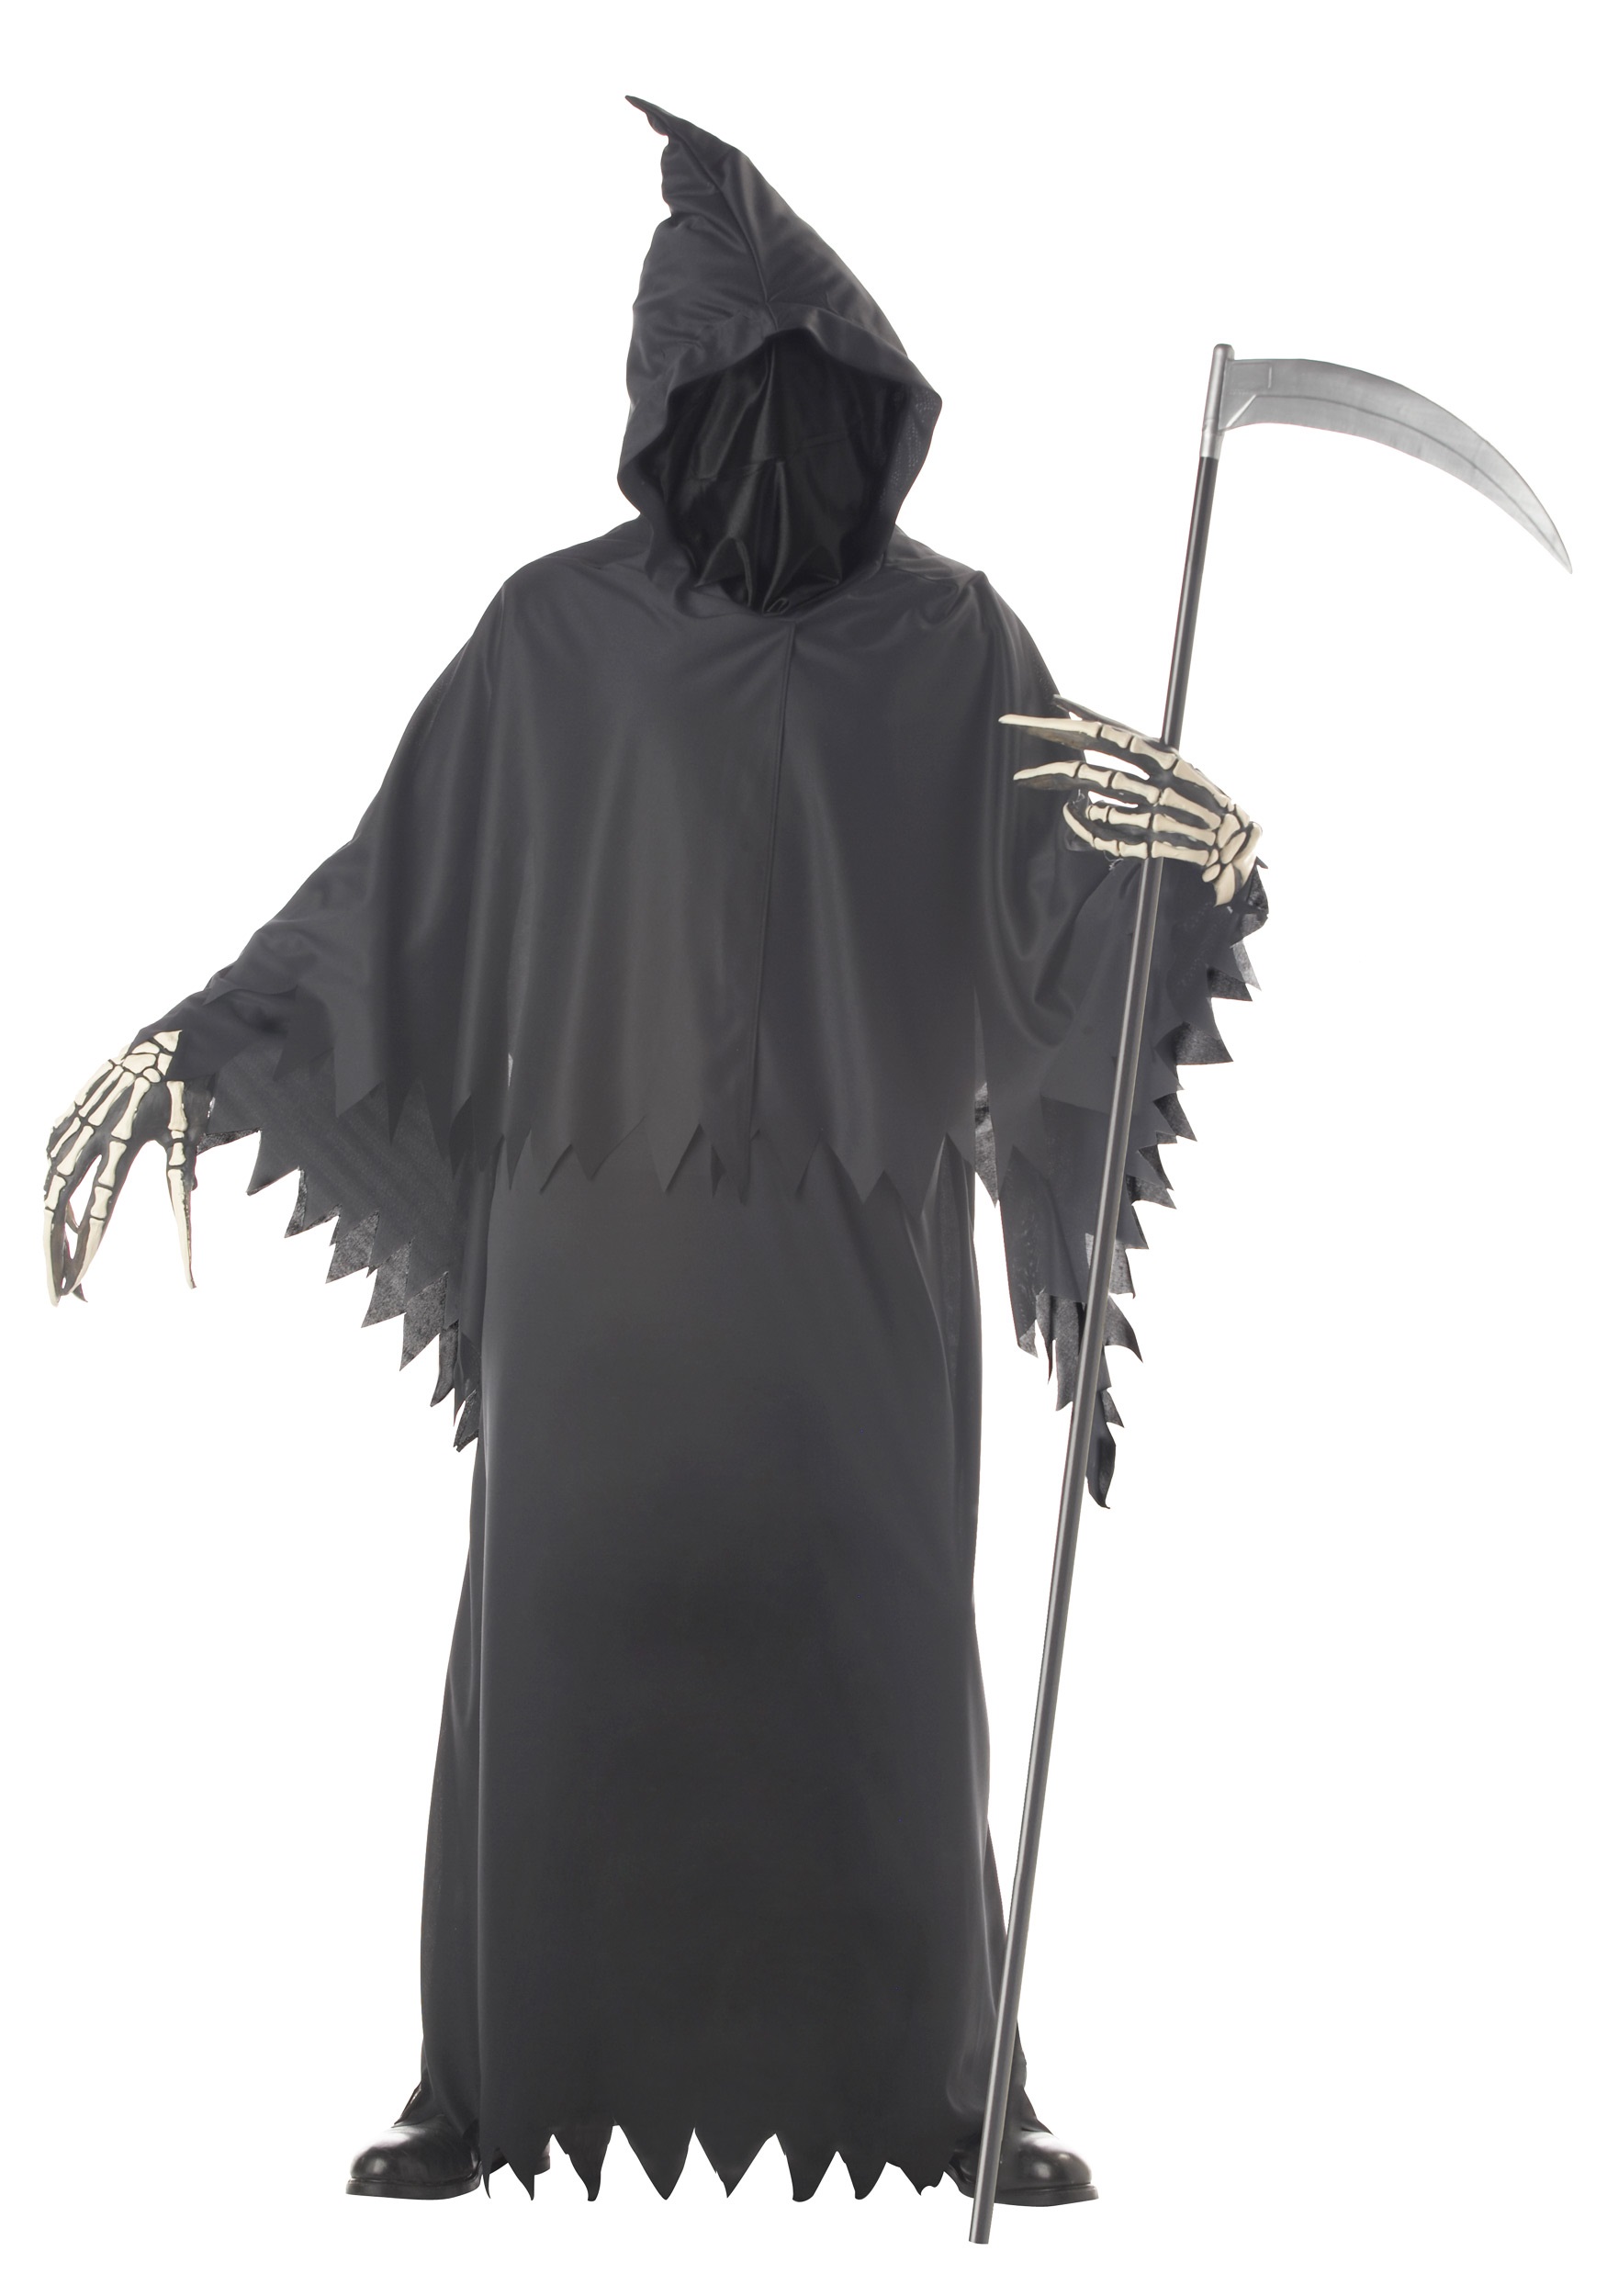 How to make an easy grim reaper halloween costume | nancy's blog